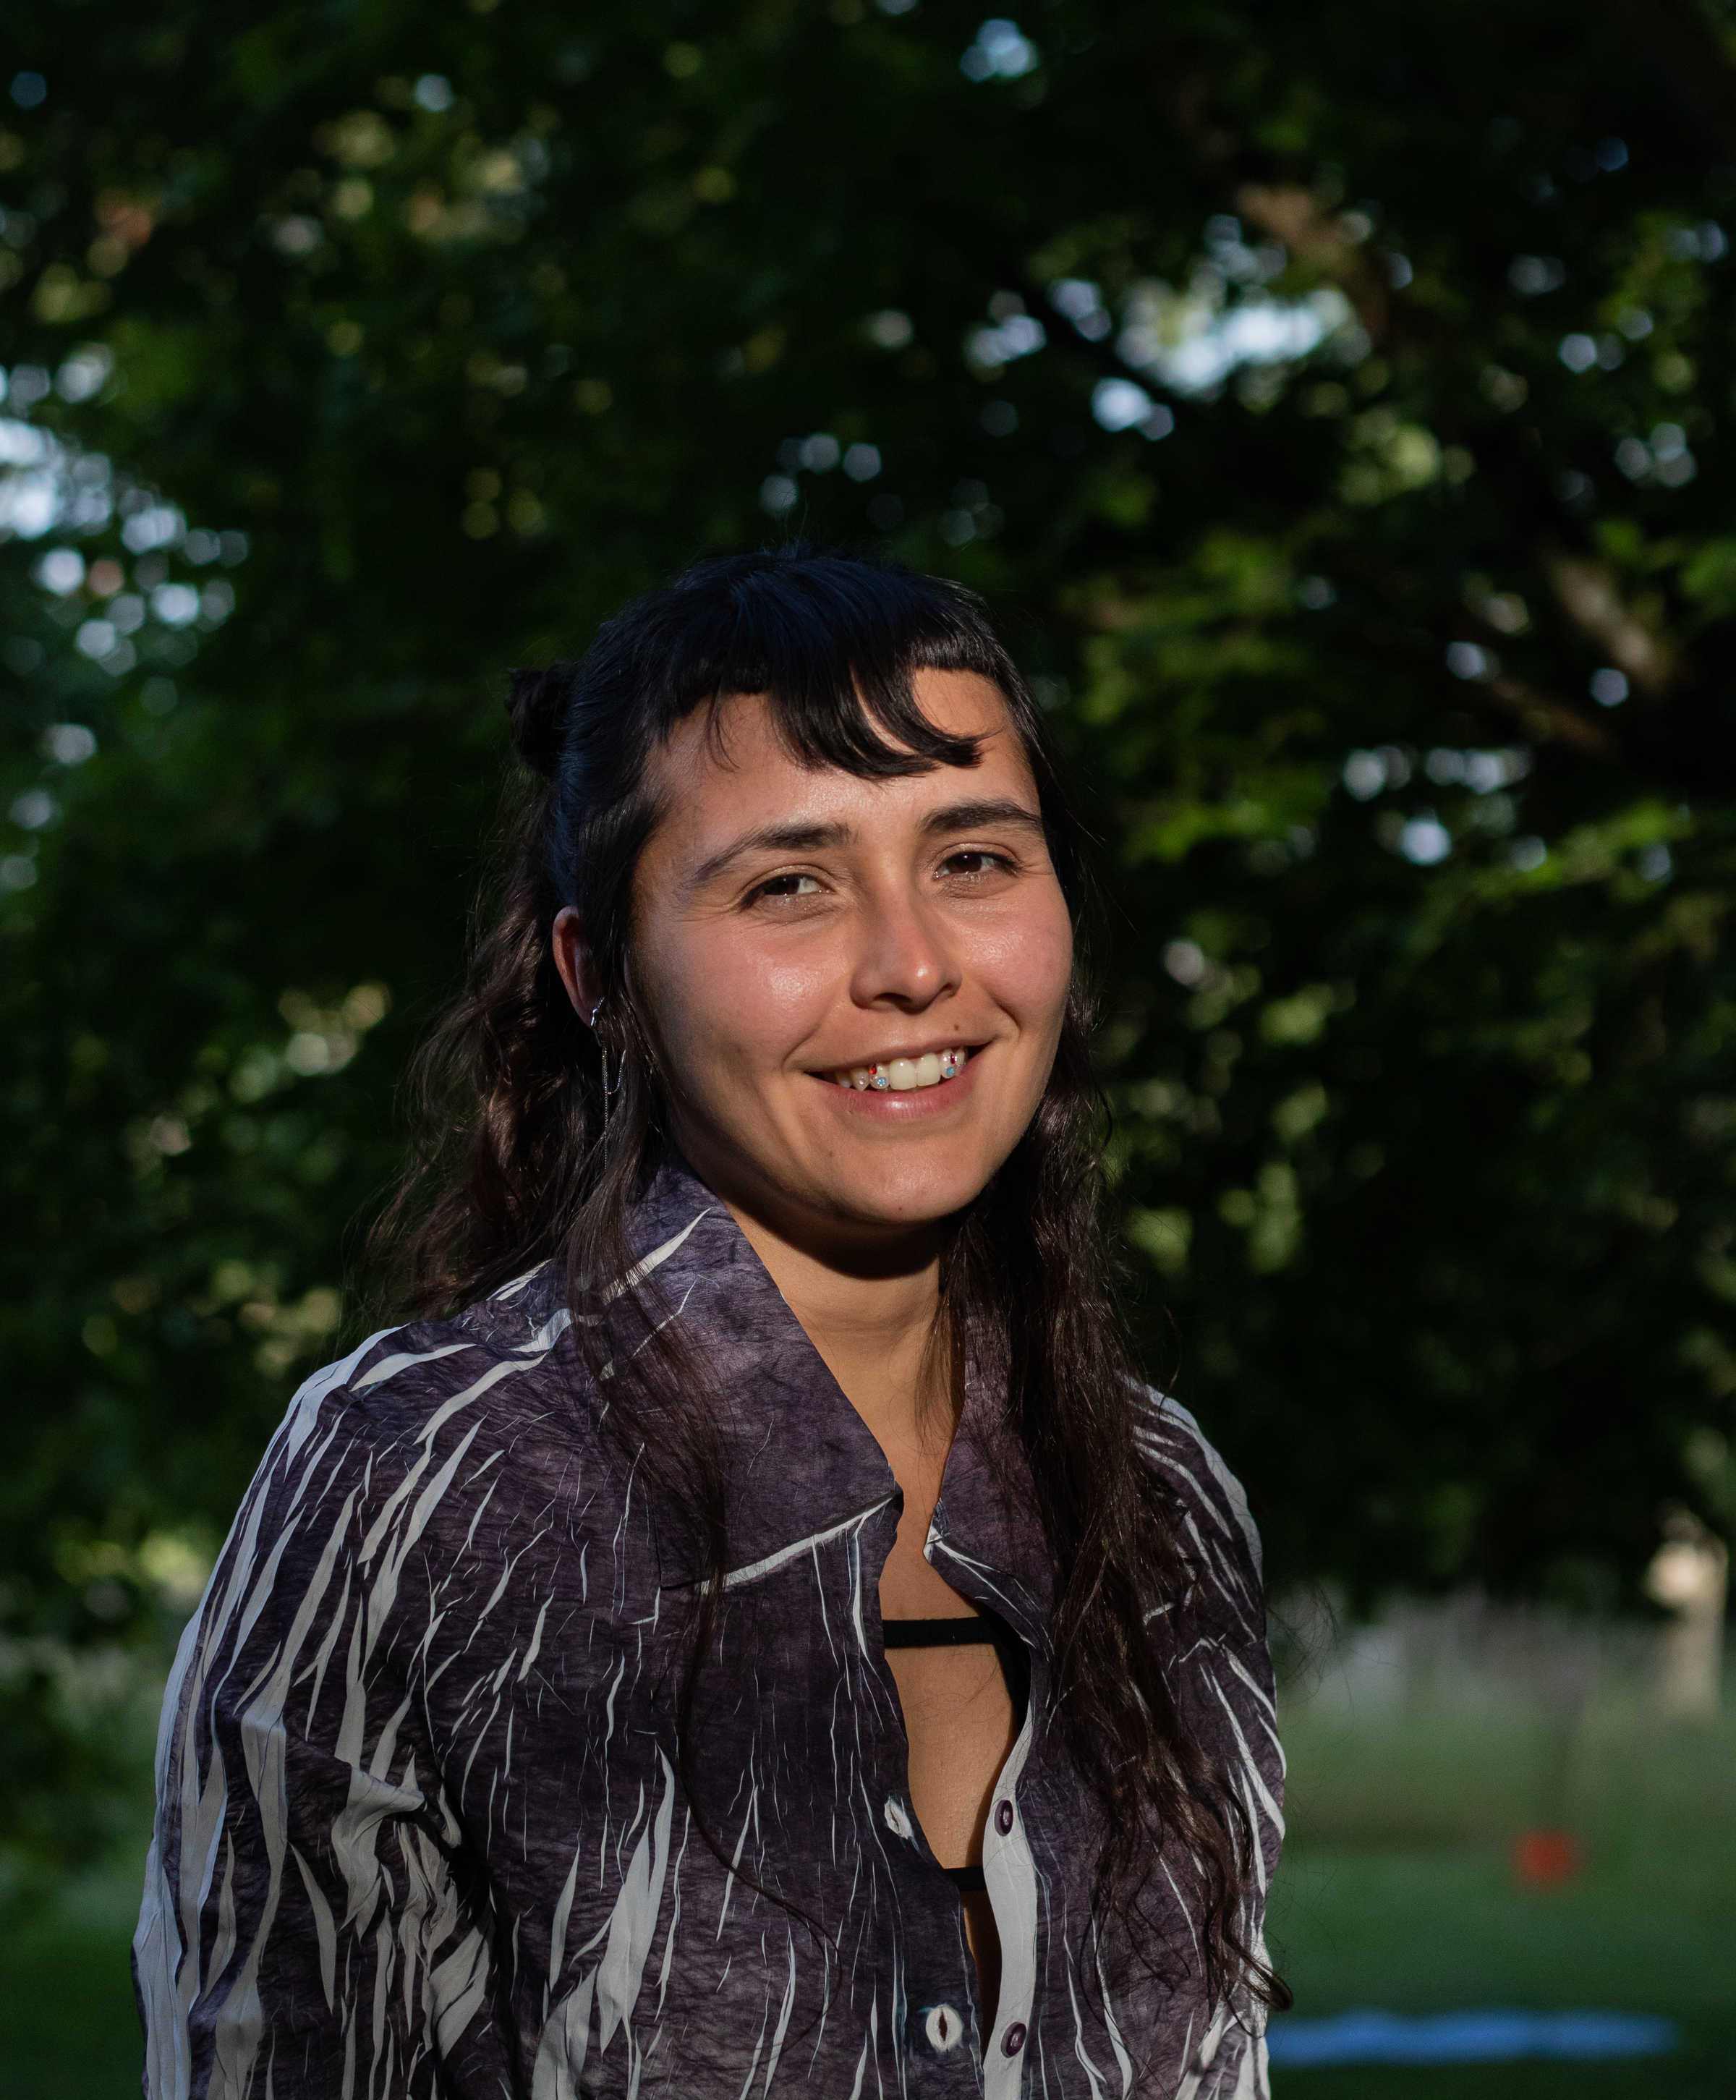 Alexandra Martens Serrano portrayed by Dandelion Eghosa for DAI (copyright holder). PAF, St. Erme, 2022